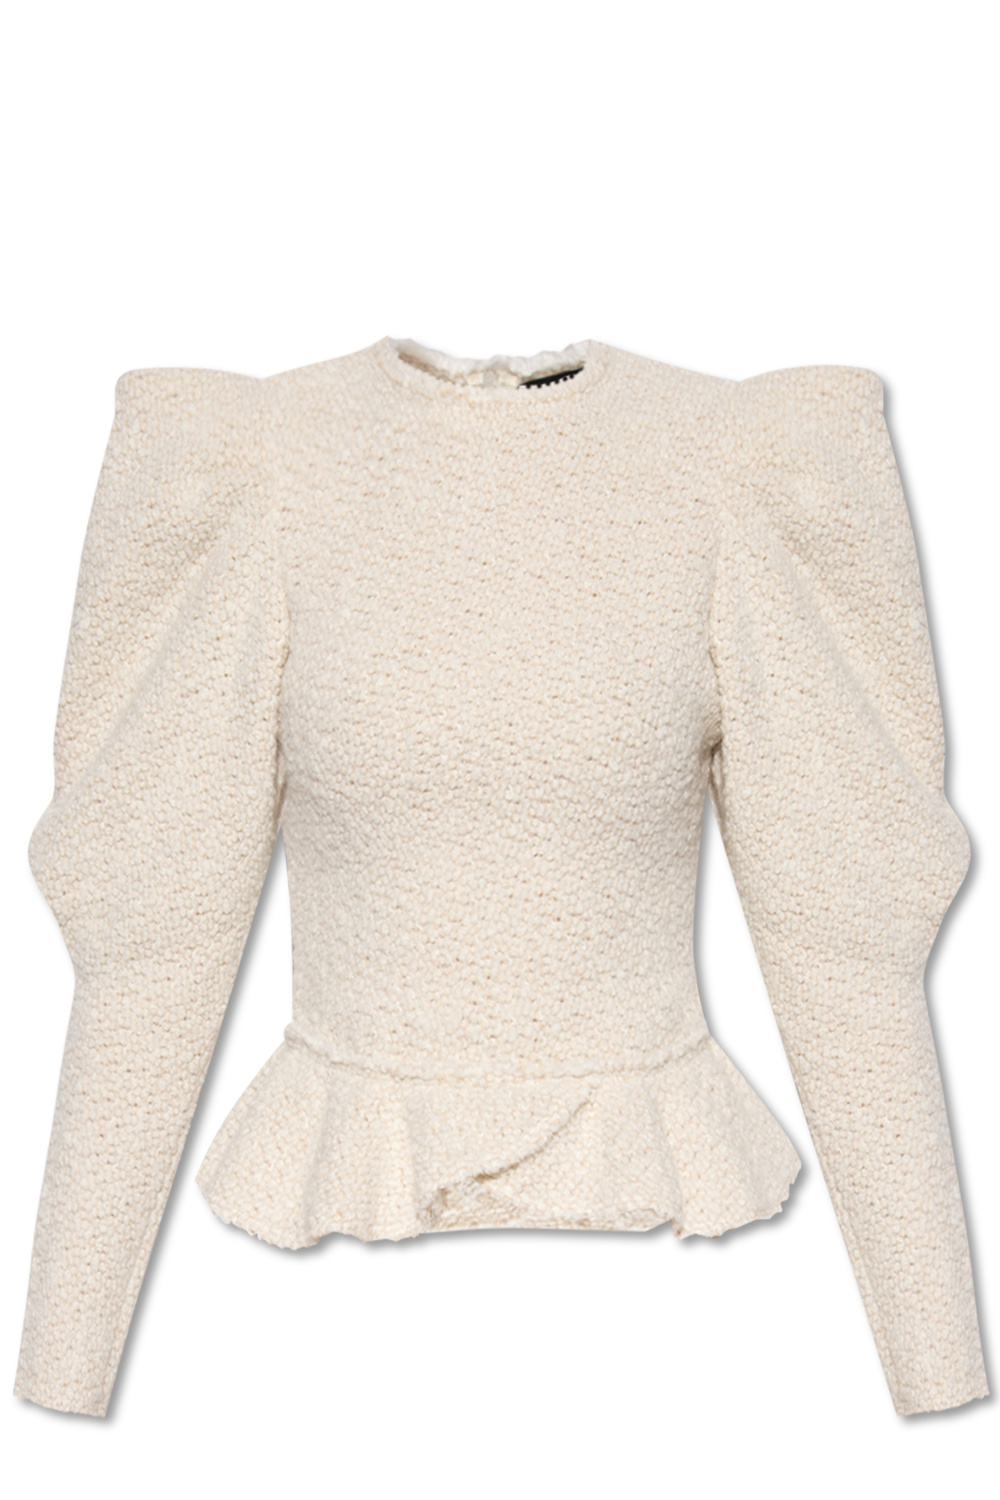 Isabel Marant Ruffled sweater